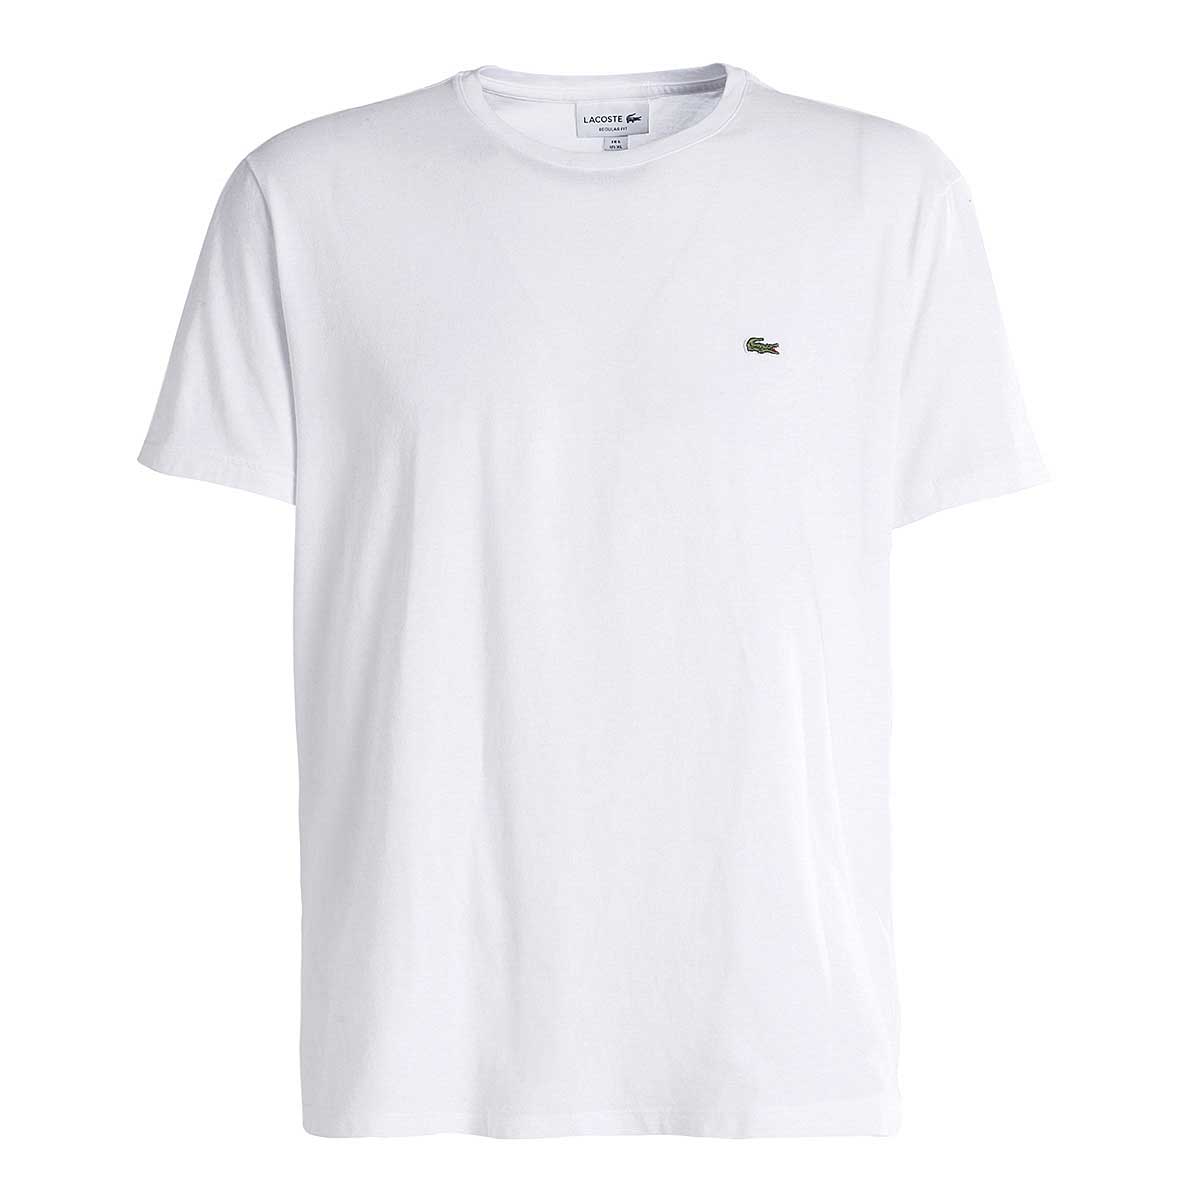 Lacoste Small Croc T-Shirt, White